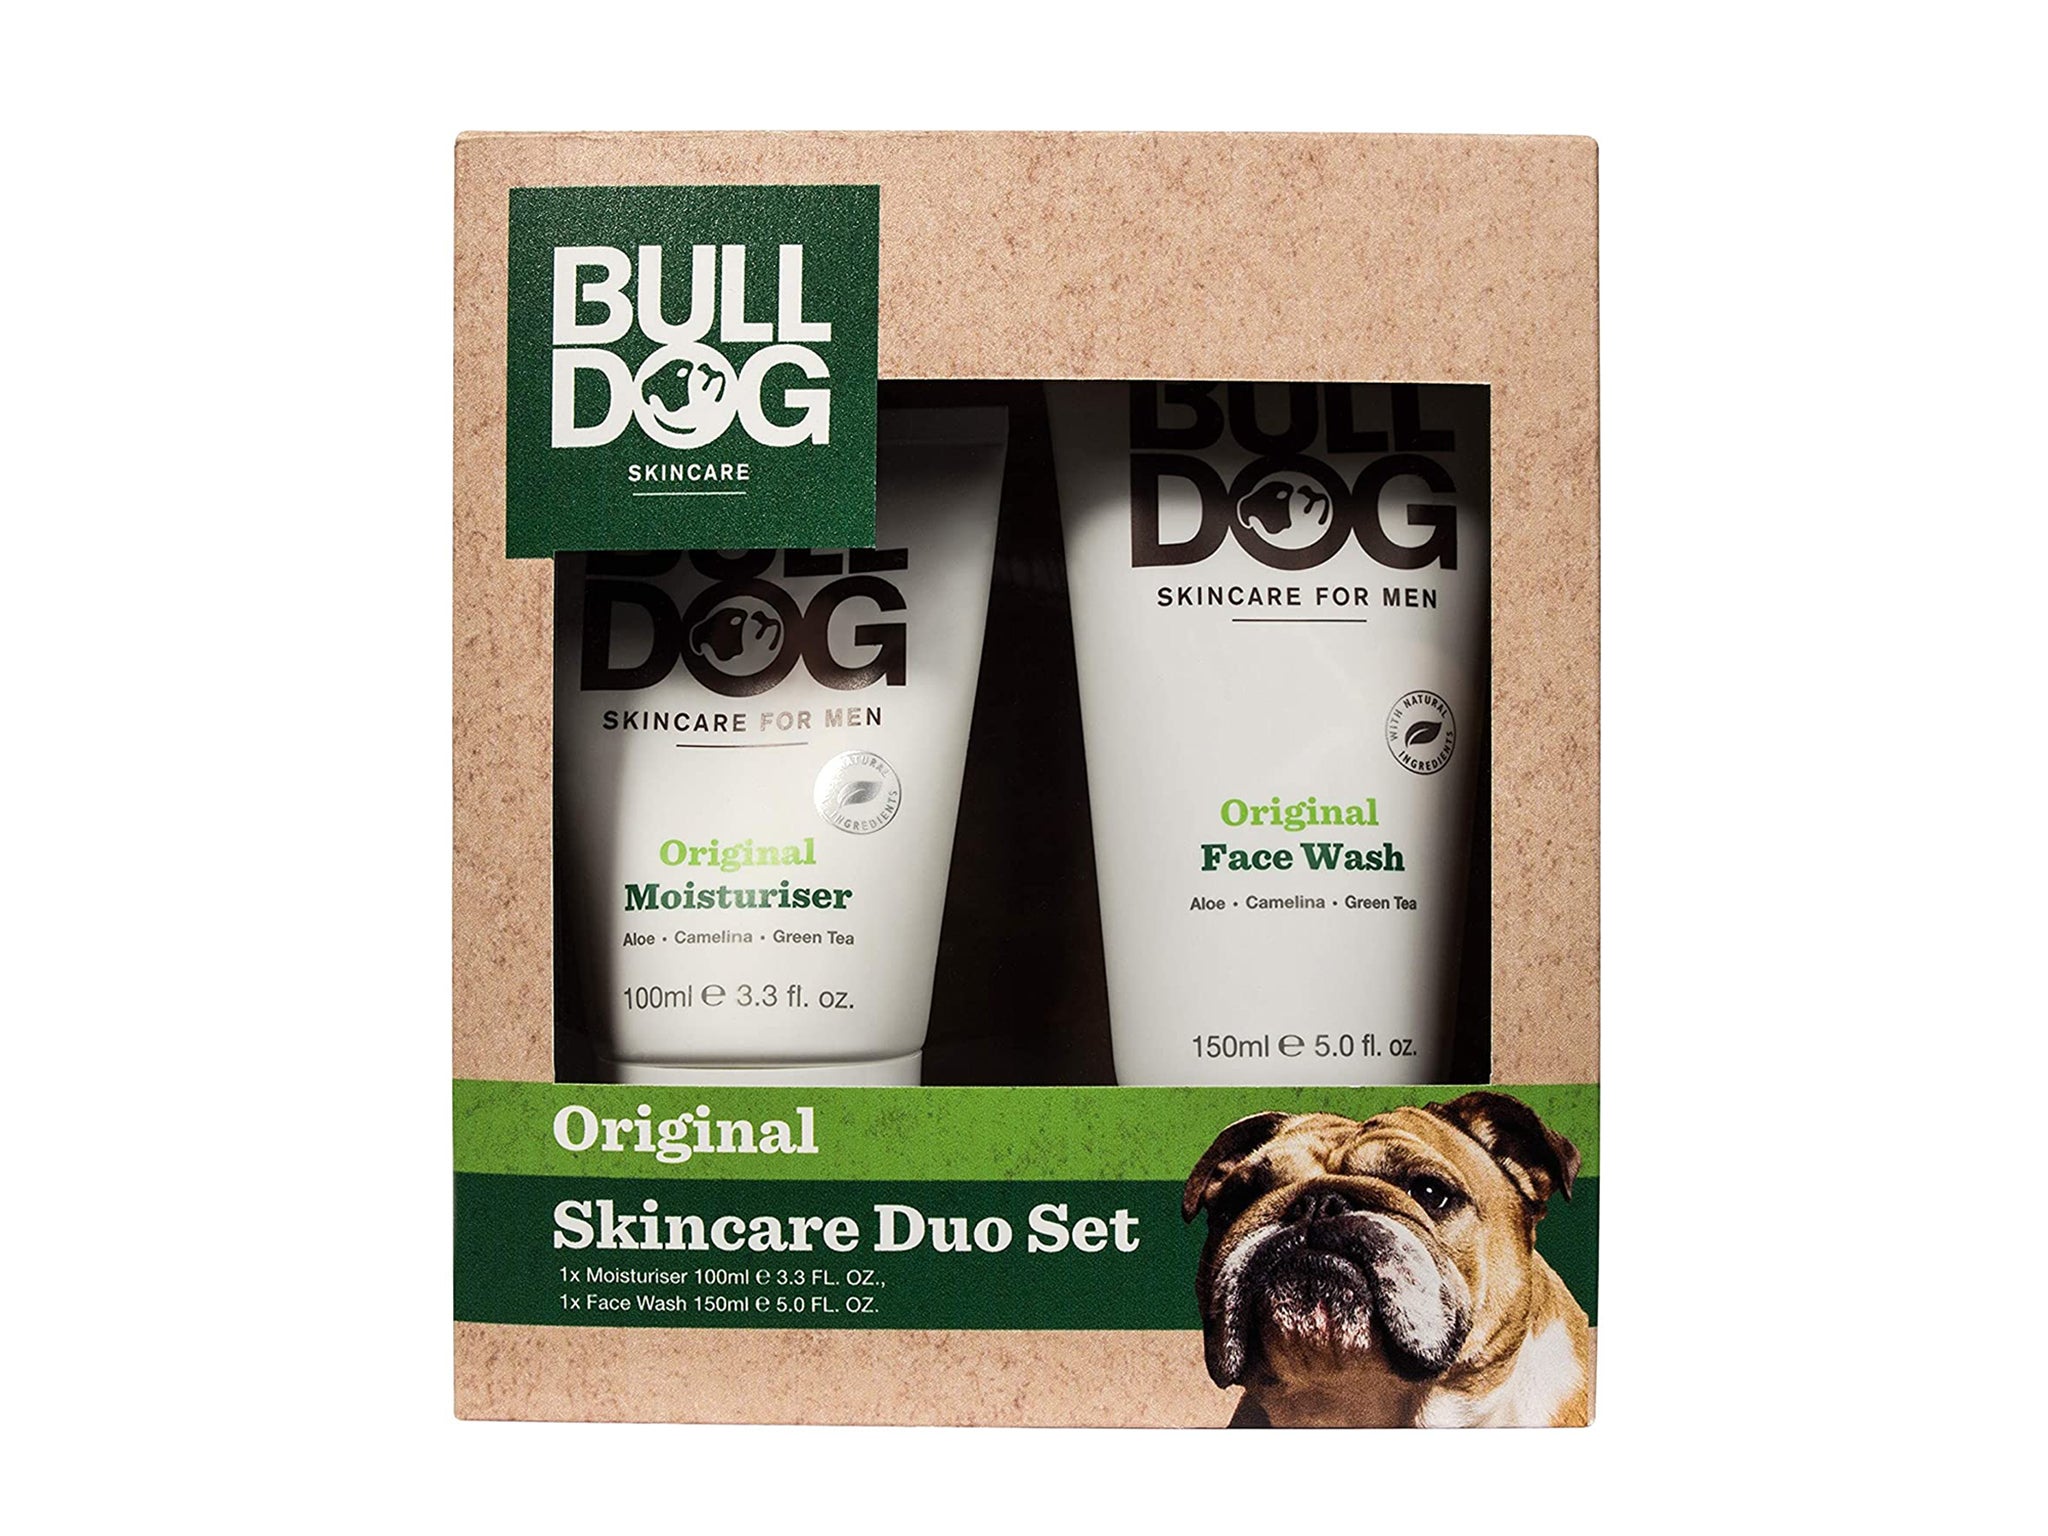 Bulldog-skincare-duo-set-indybest-best-mens-grooming-gift.jpg